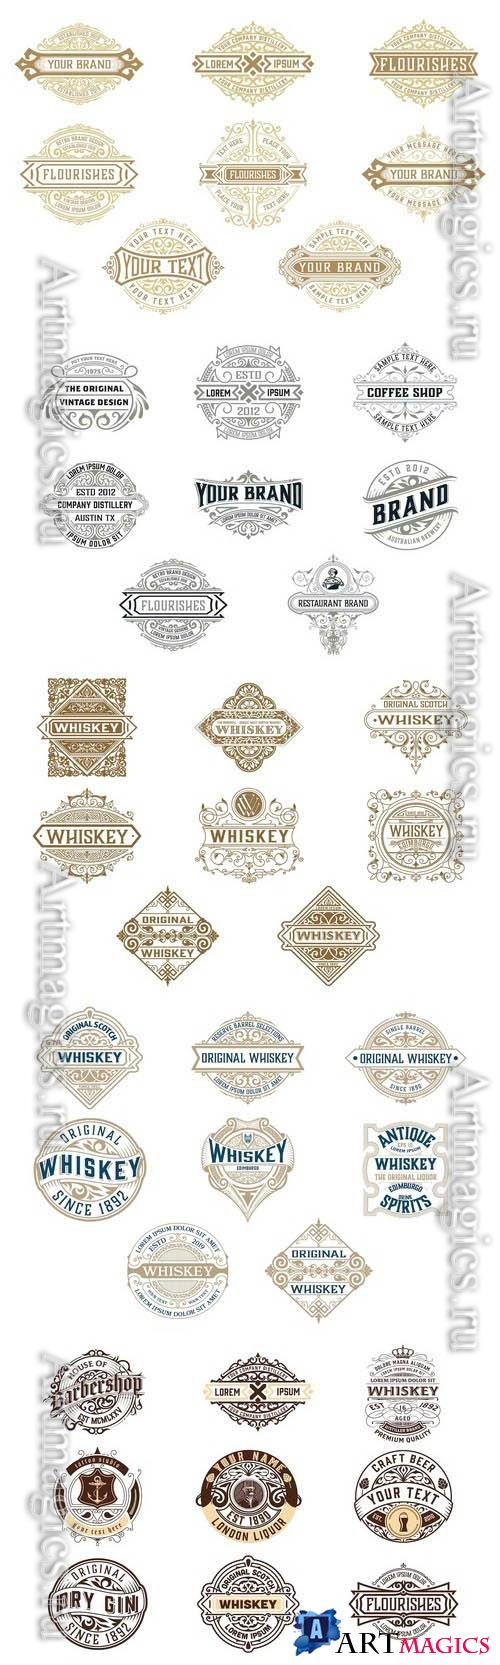 Vintage logos and badges, labels for packing vector set vol 4